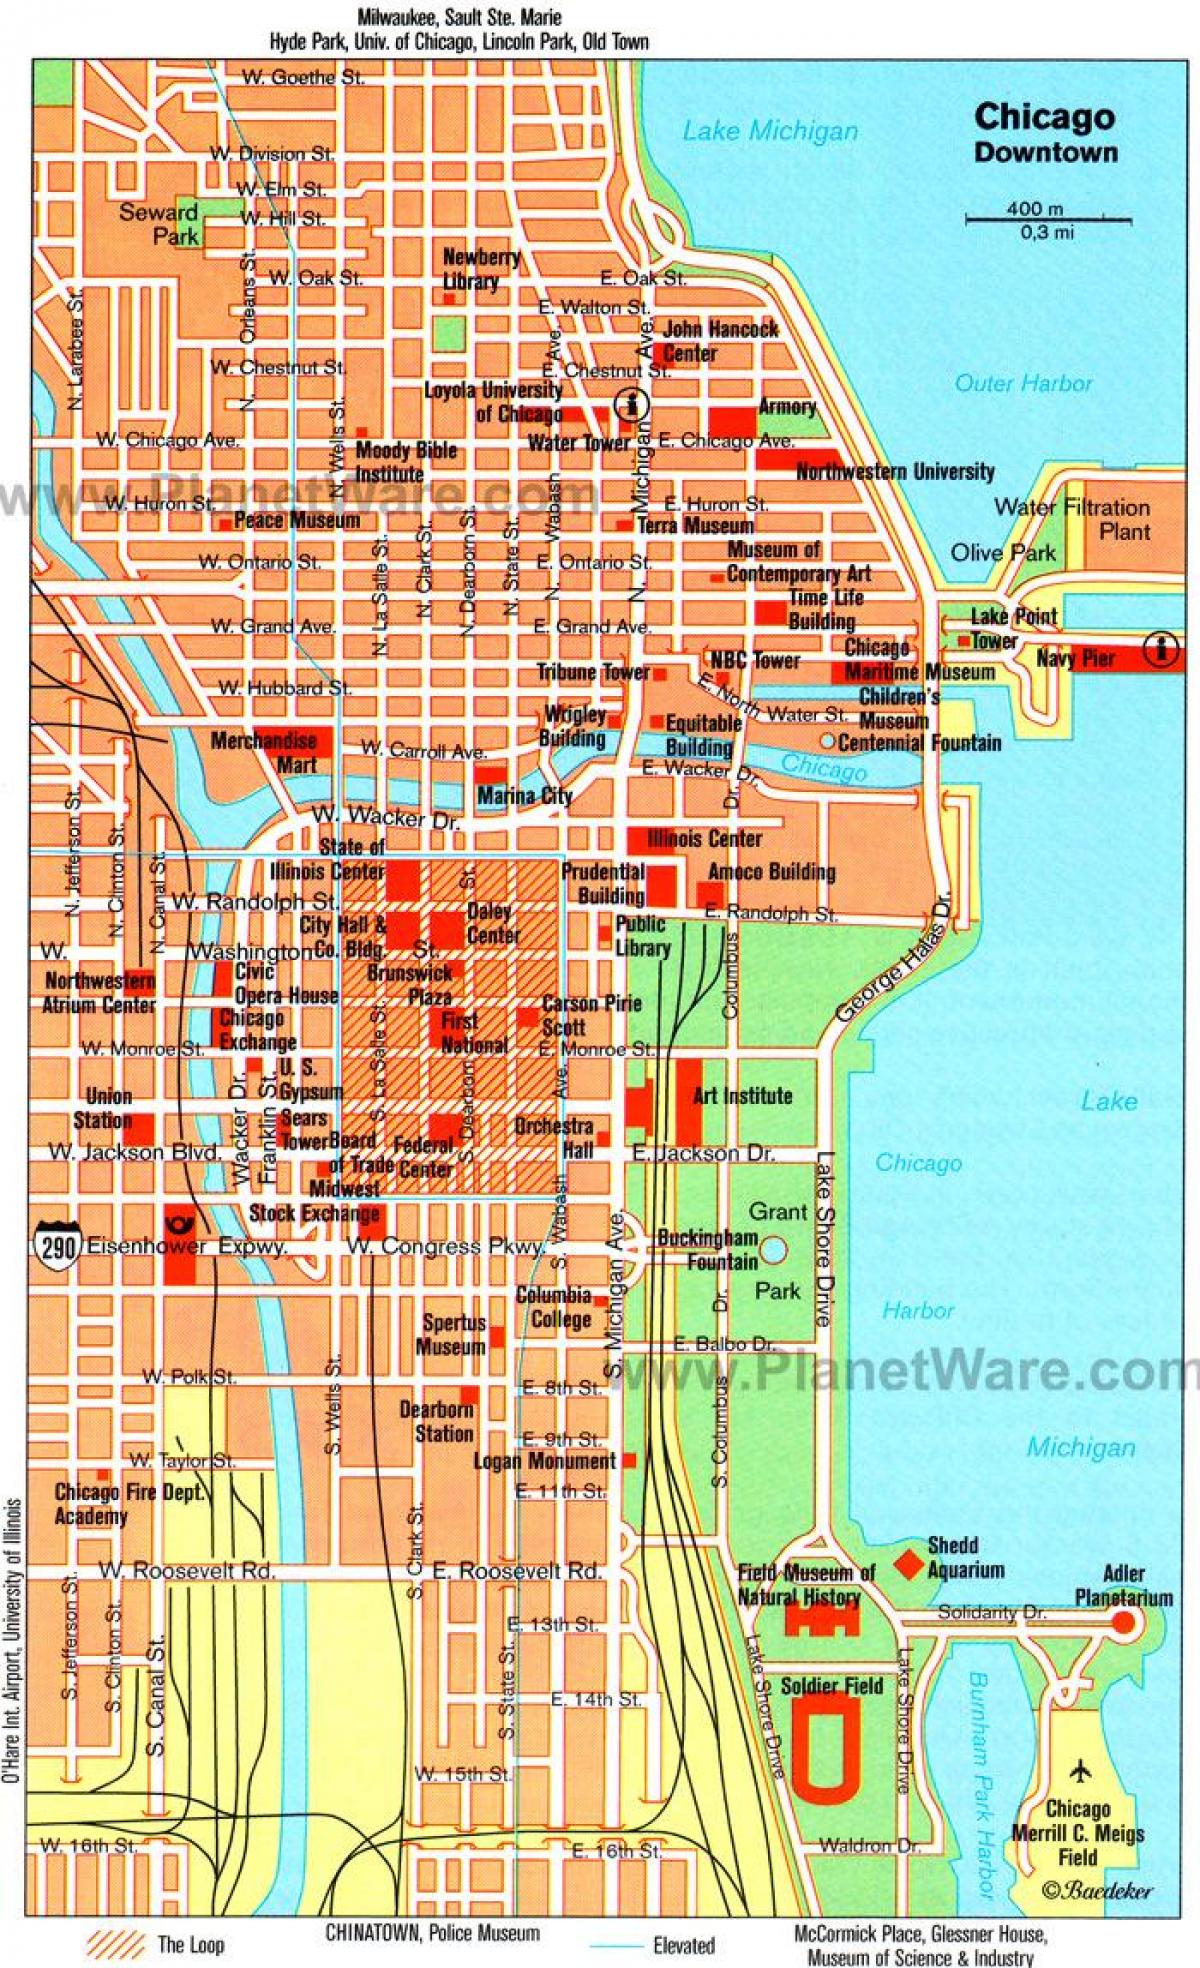 kort af Chicago staðir